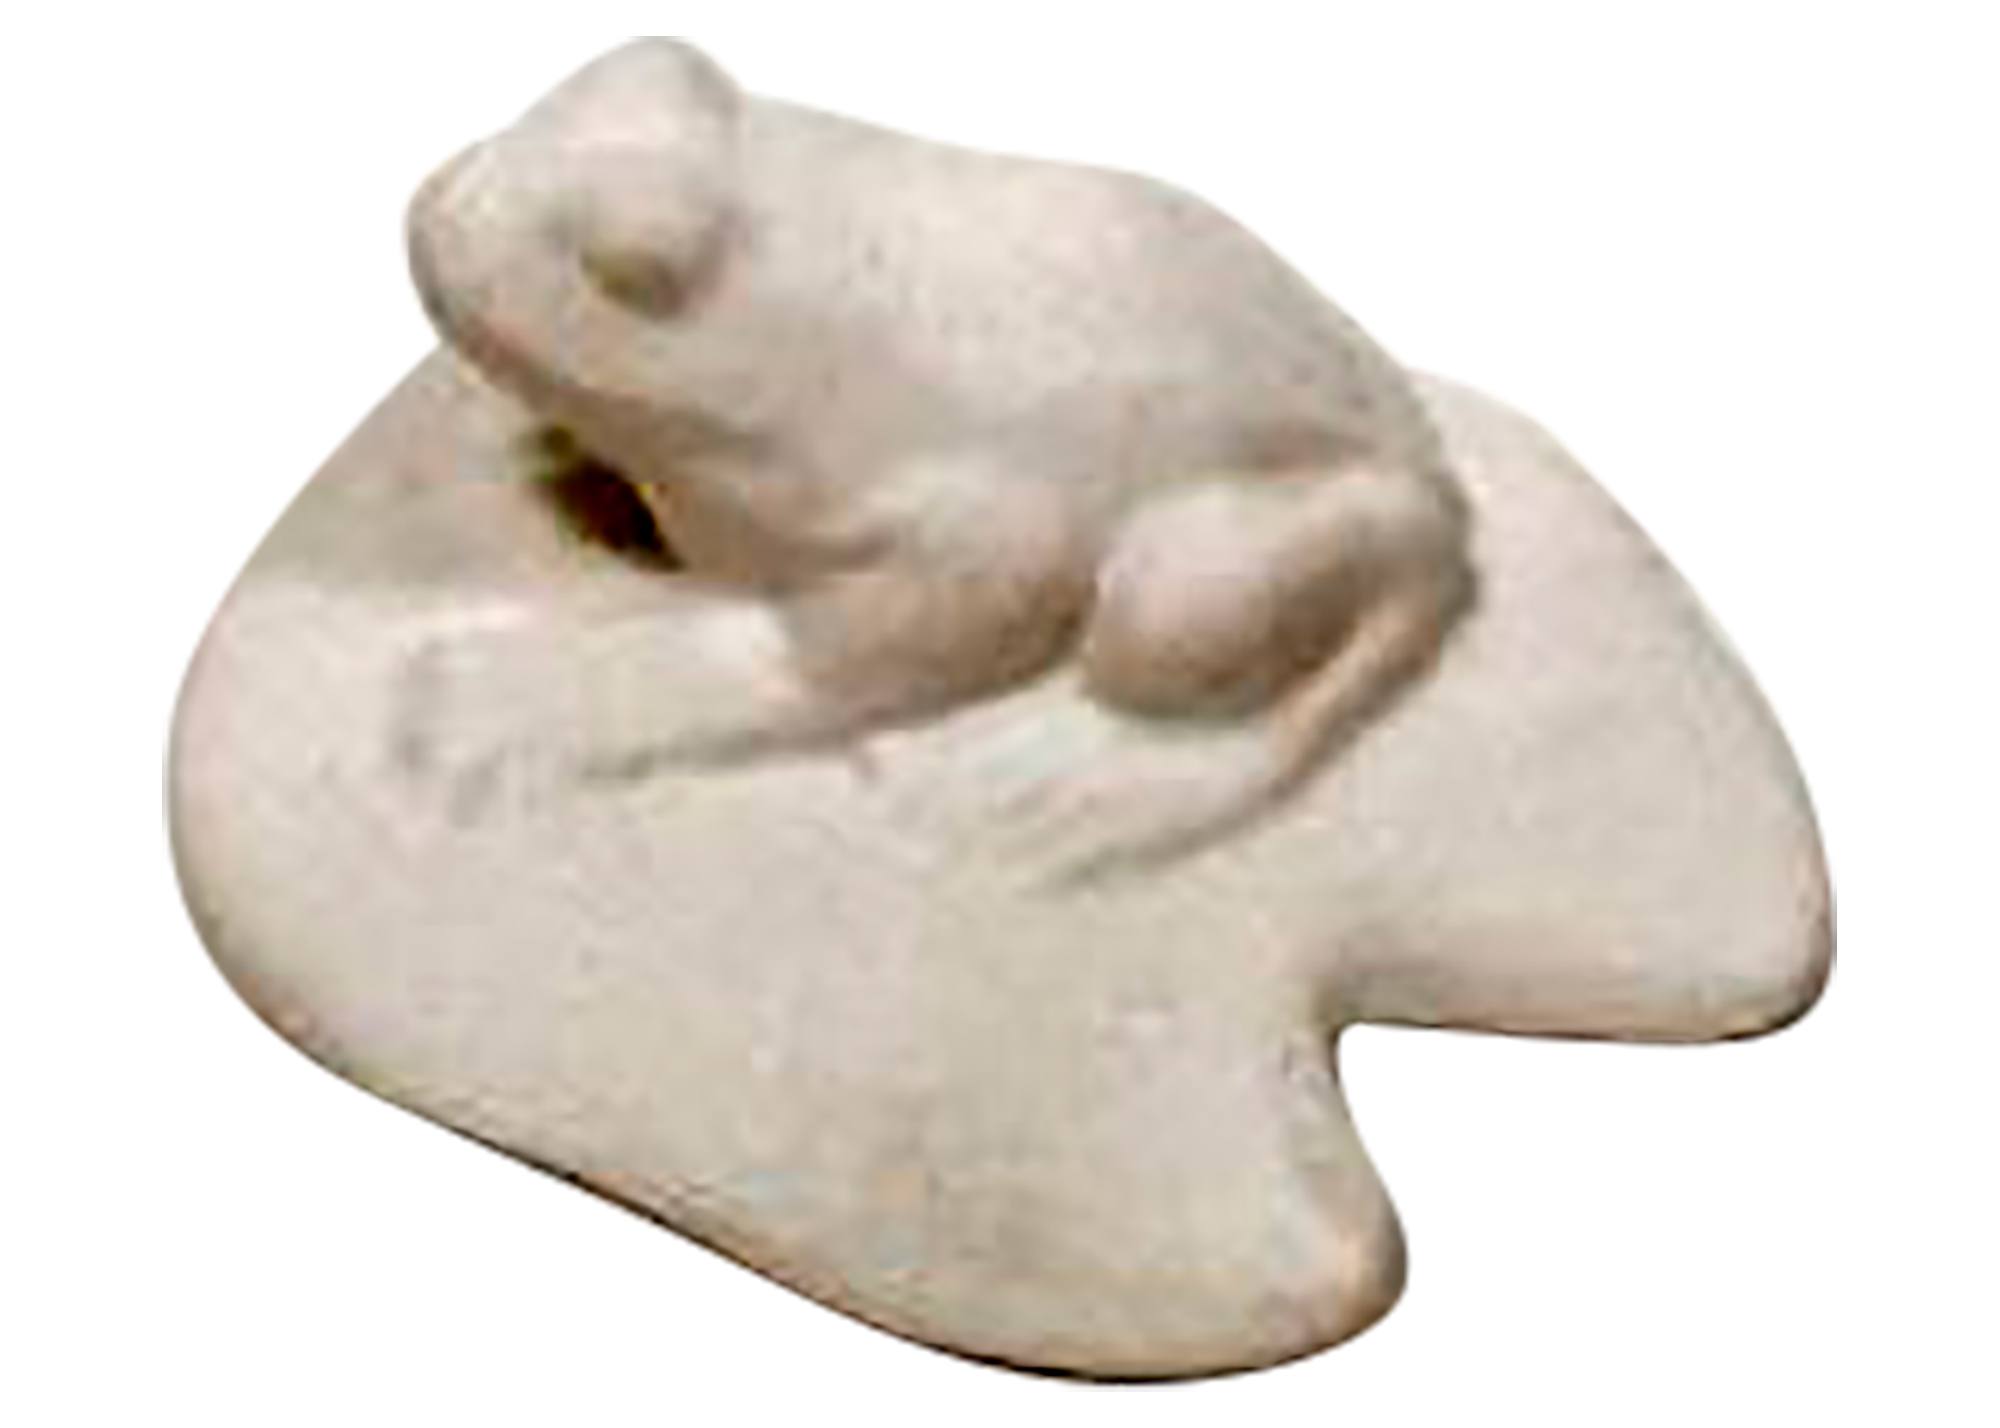 Buy Unglazed Leopard Frog Figurine at GoldenCockerel.com